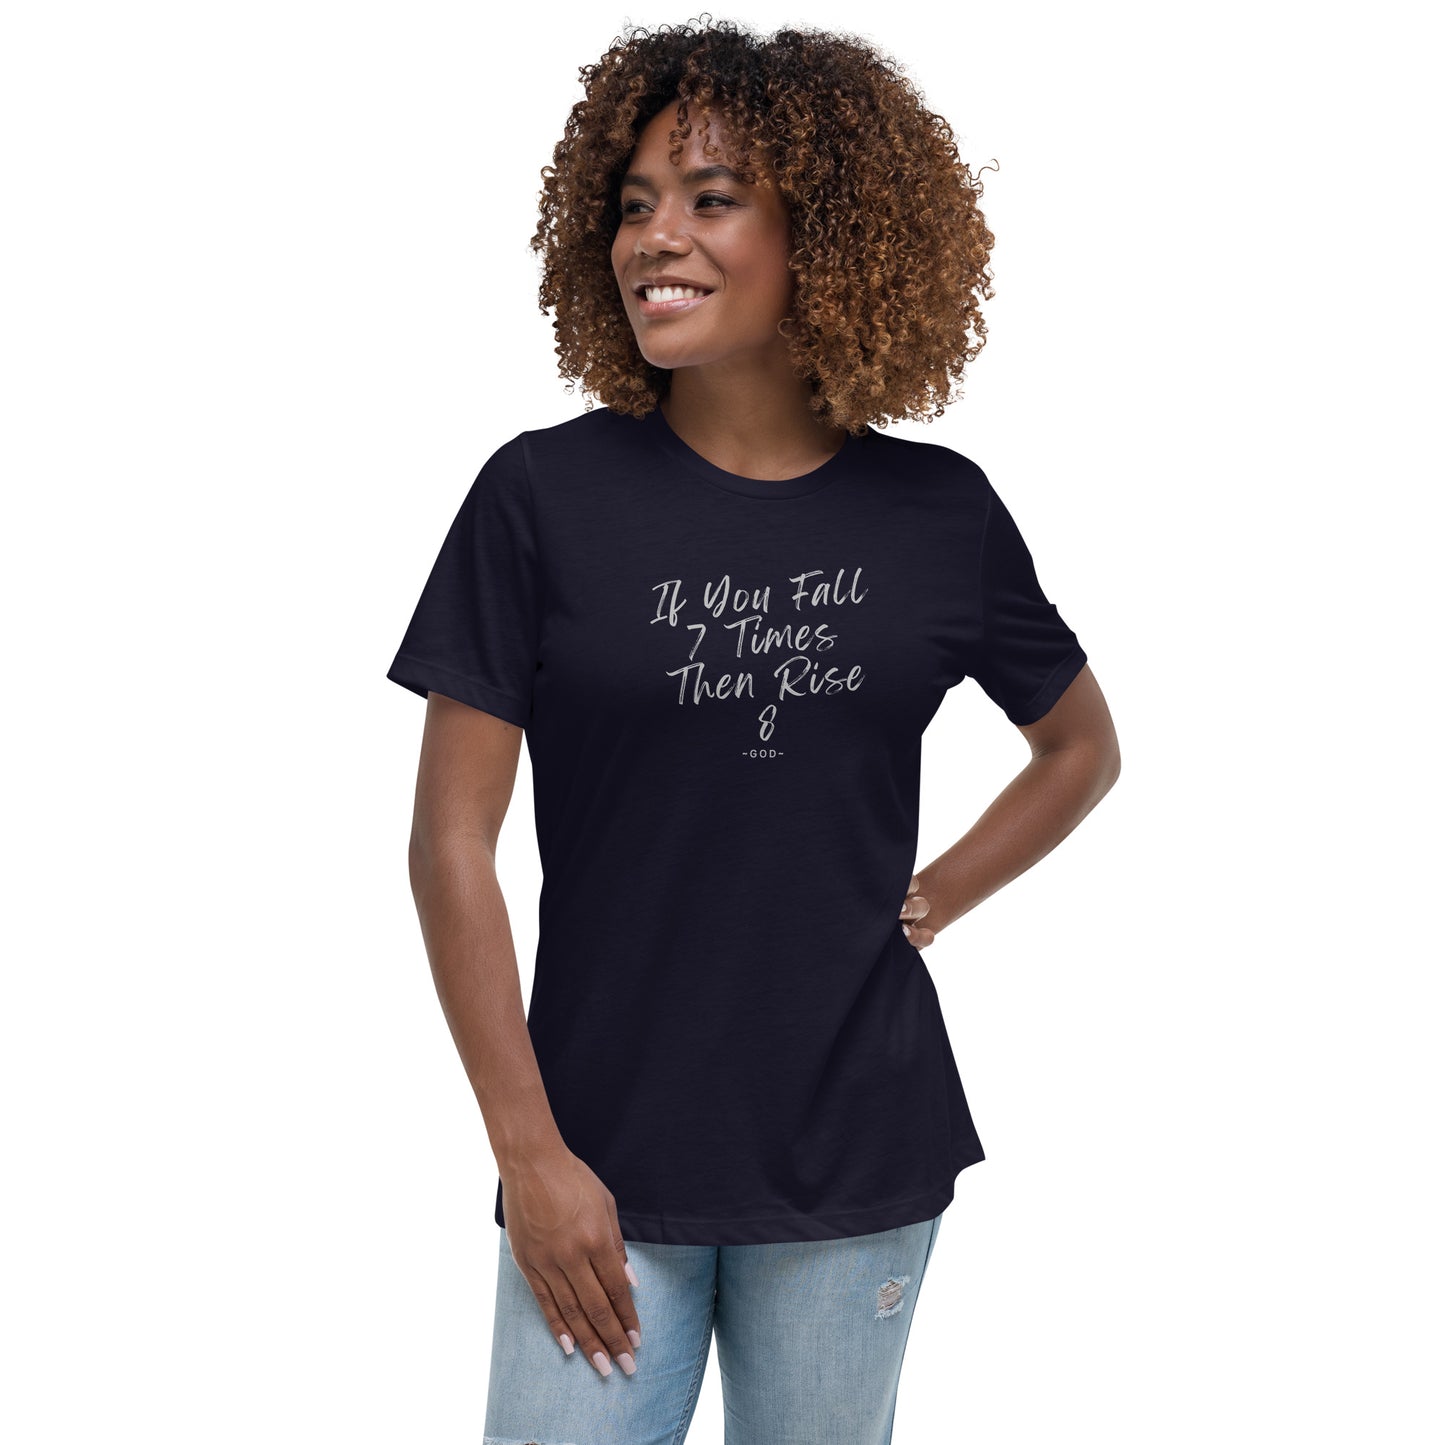 If You Fall 7 Times Then Rise 8 Women's Relaxed T-Shirt